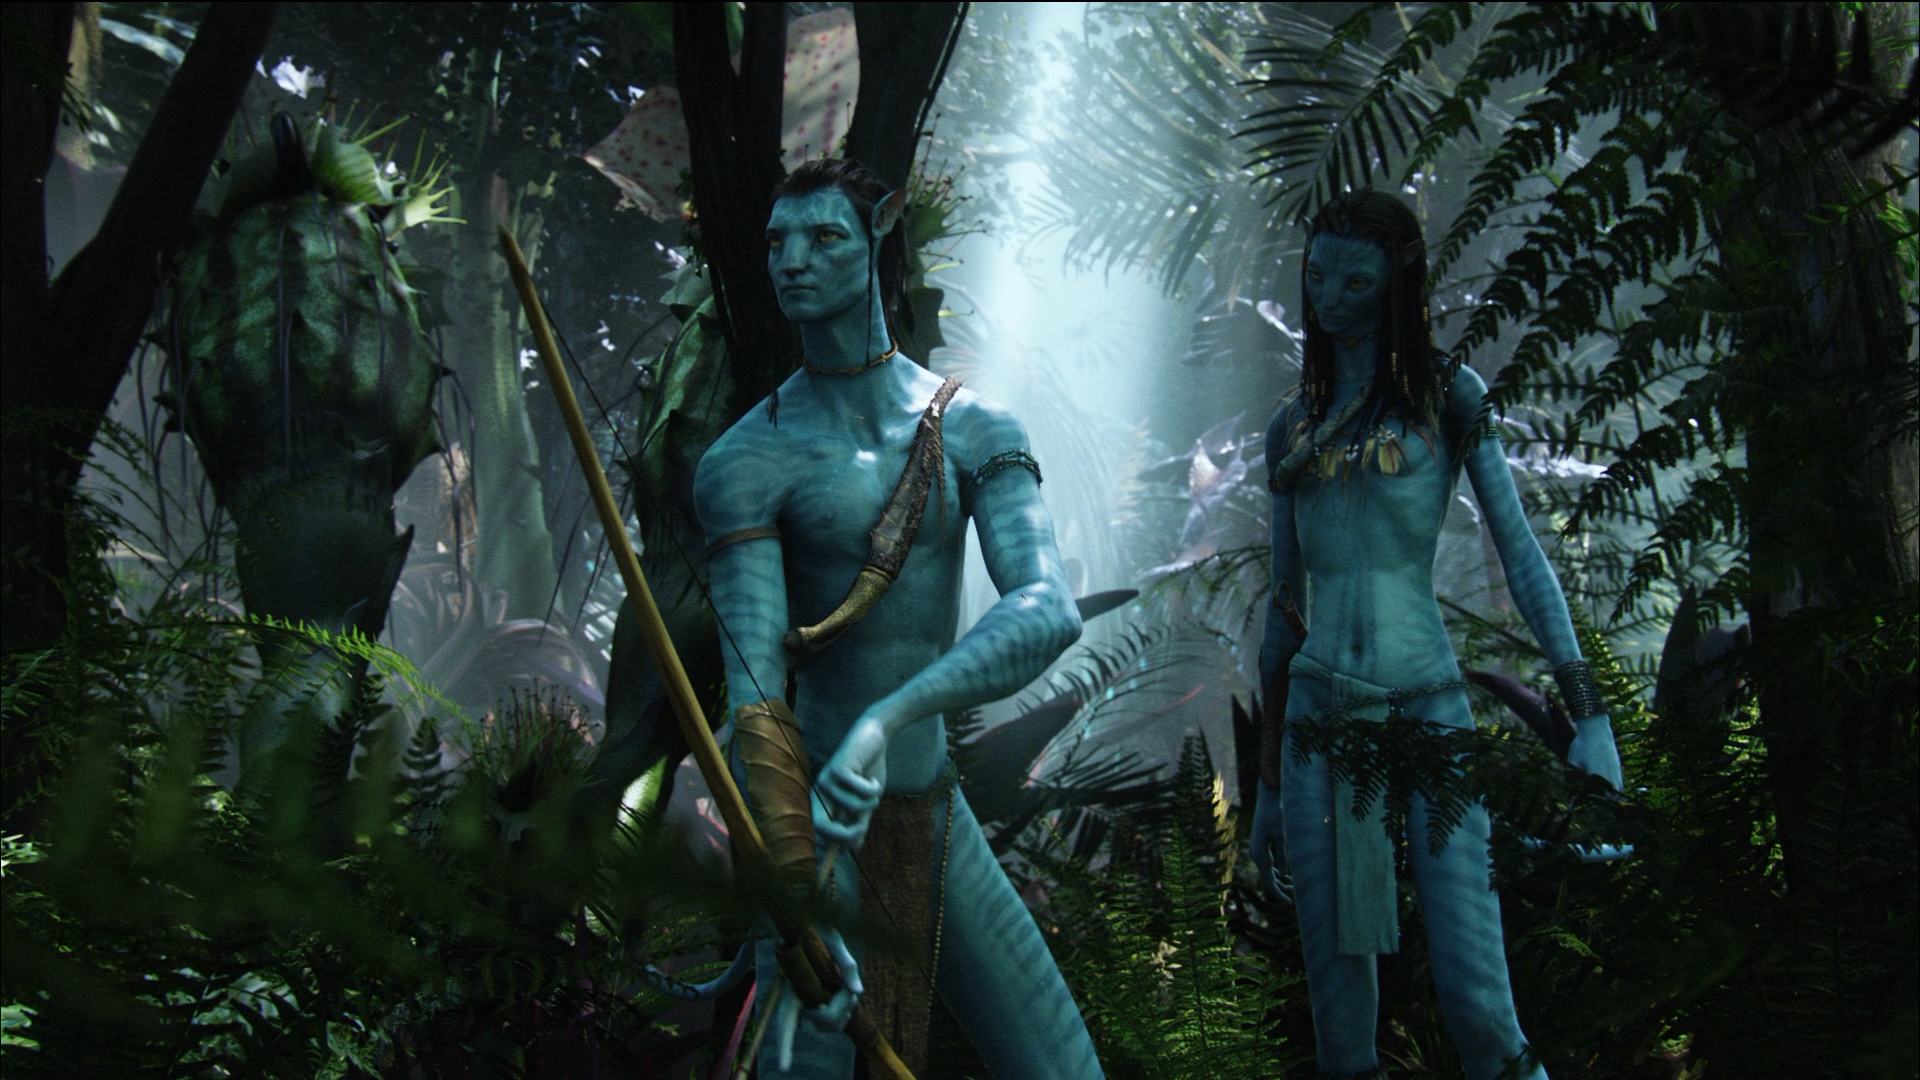 Avatar 3 DVDRIP Jaybob FR